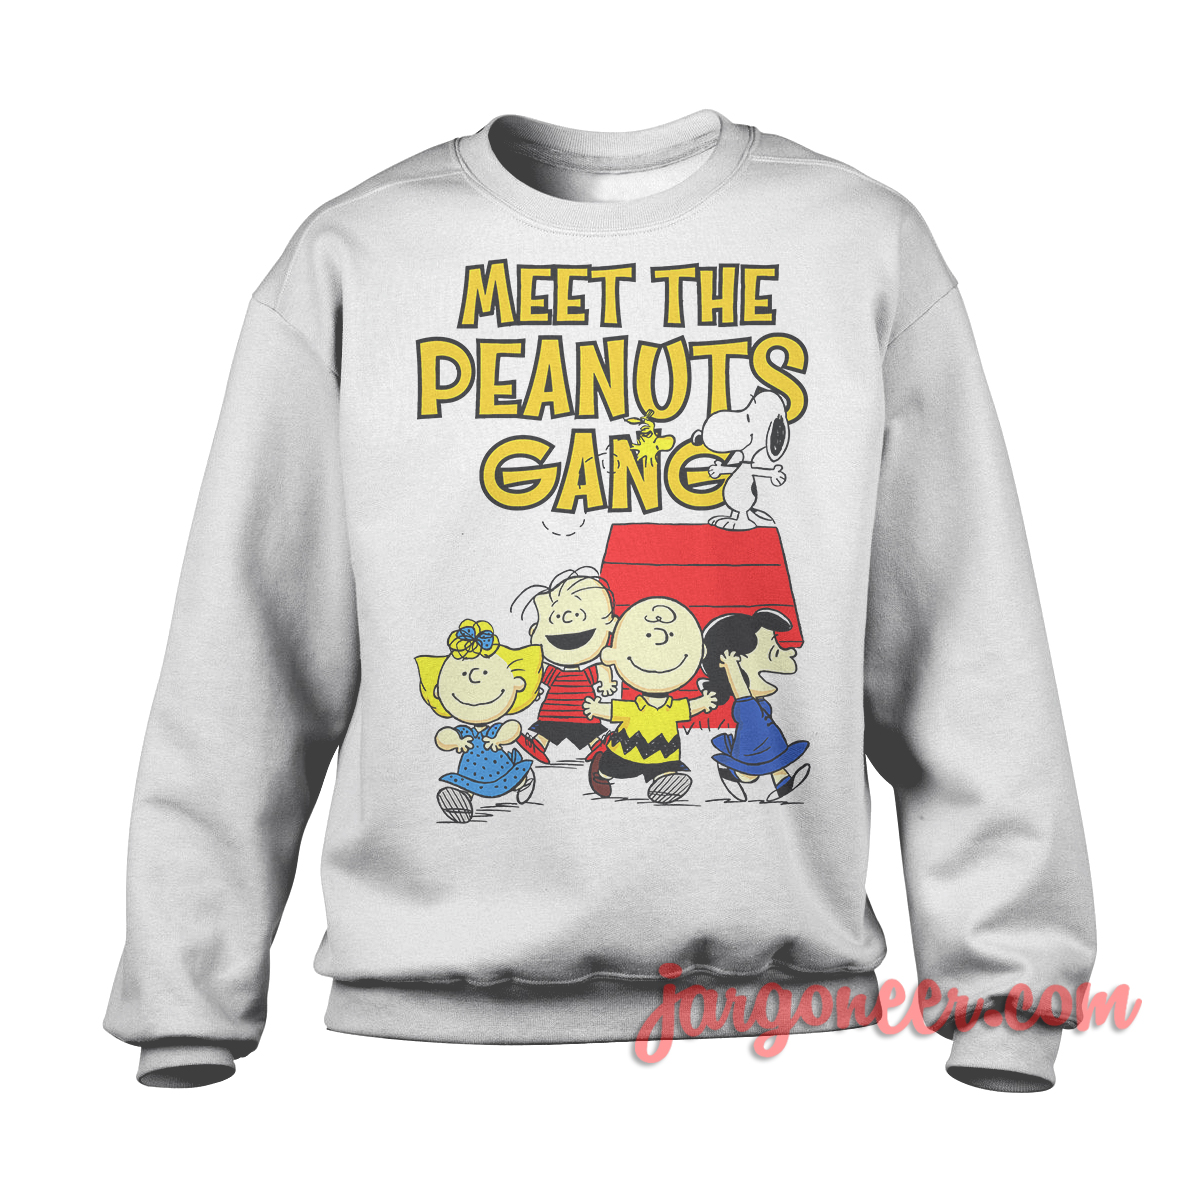 Meet The Peanuts Gang White SS - Shop Unique Graphic Cool Shirt Designs